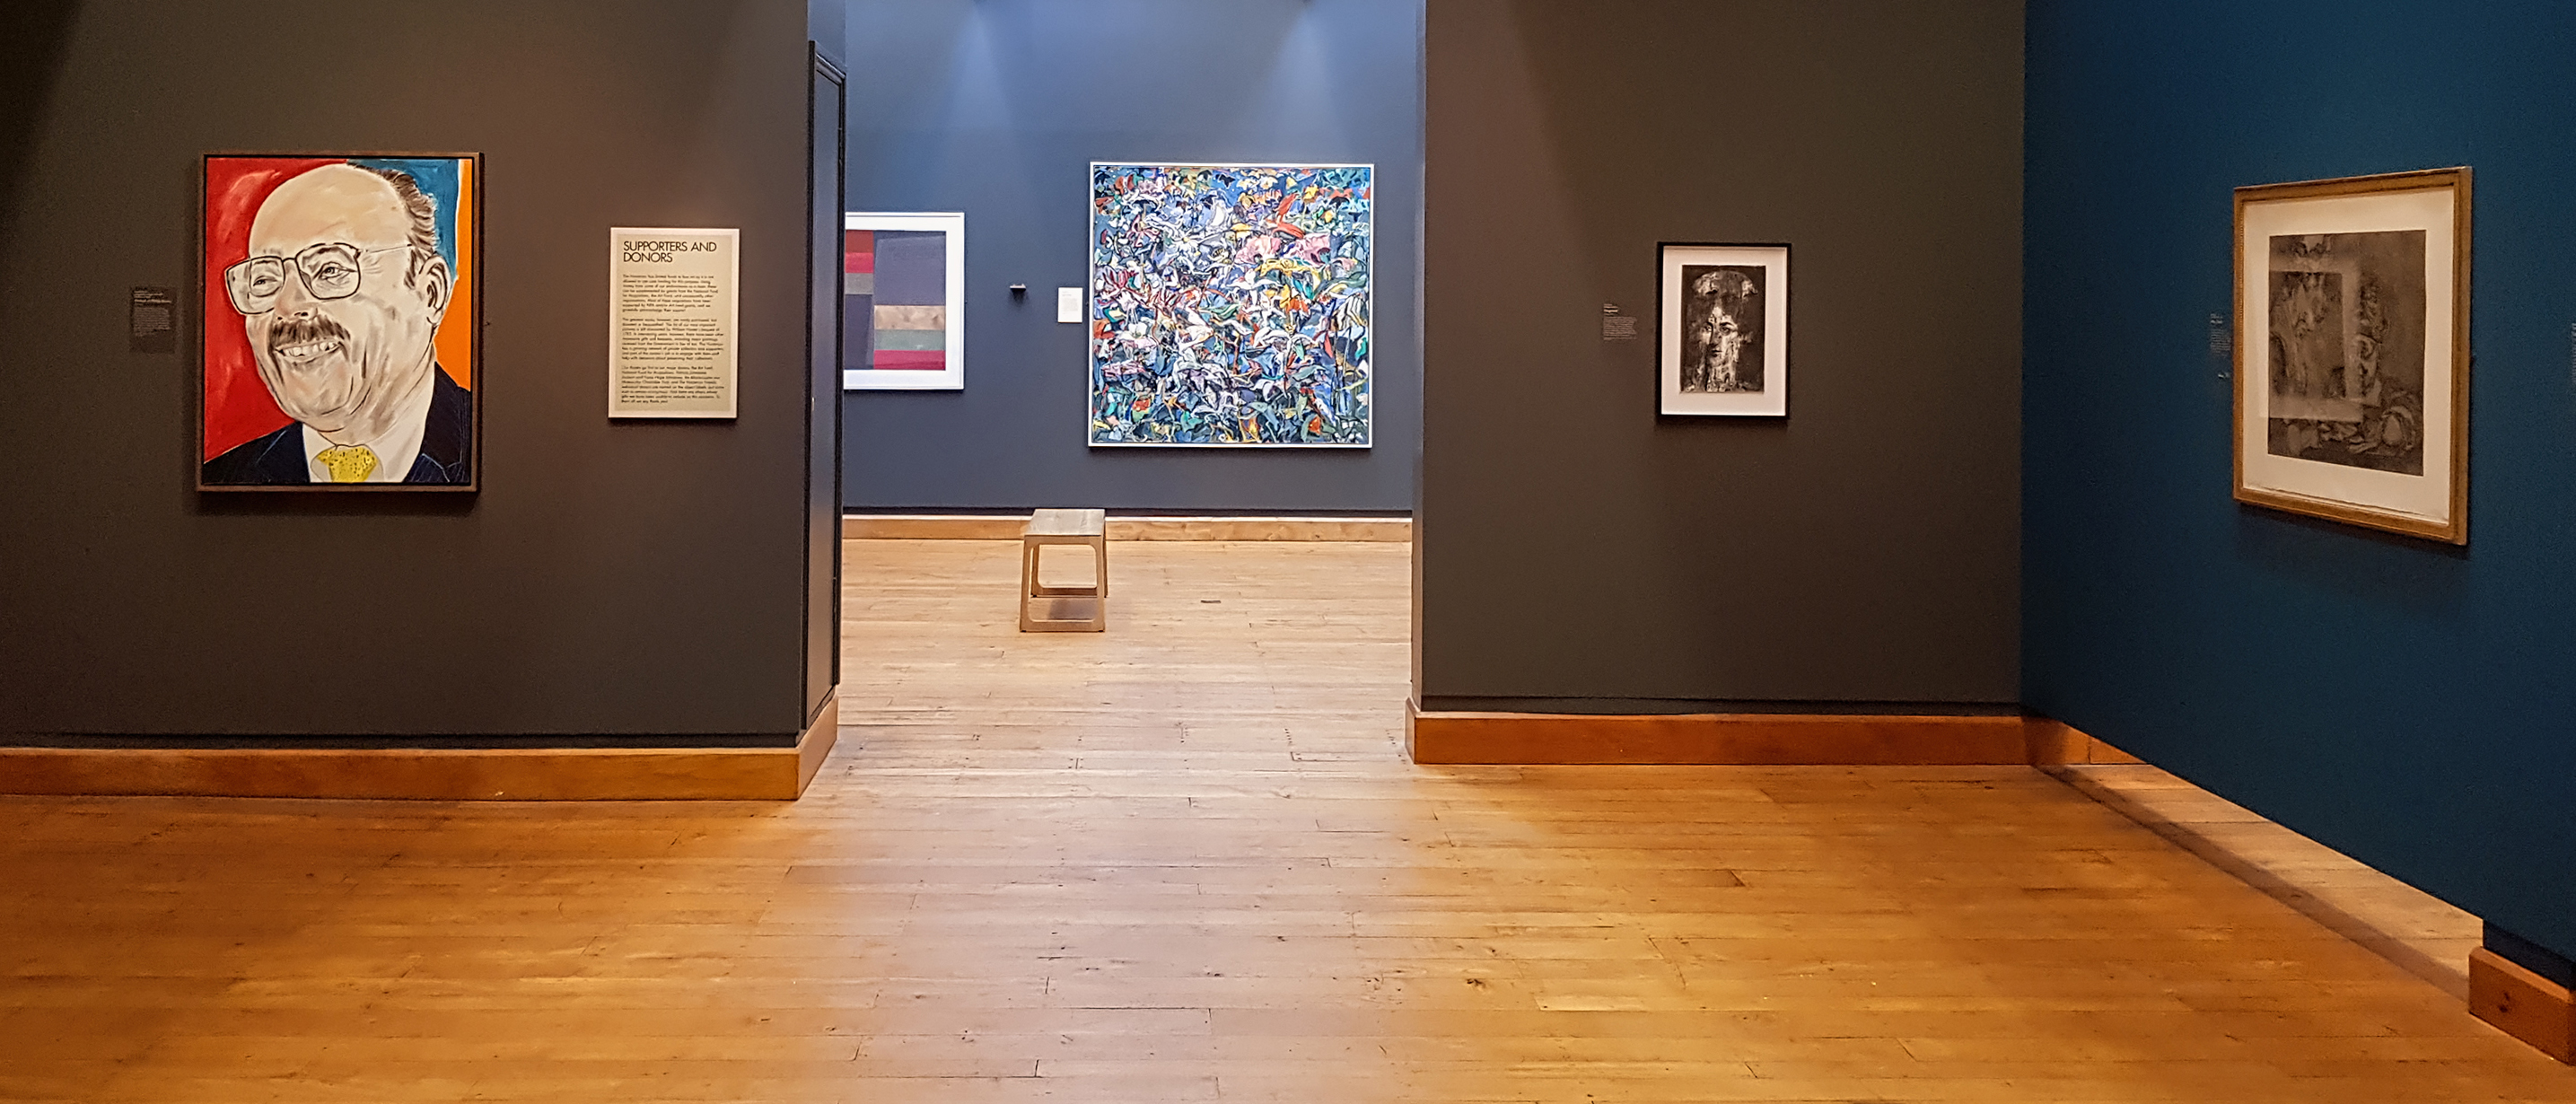 A Curator's Choice exhibition